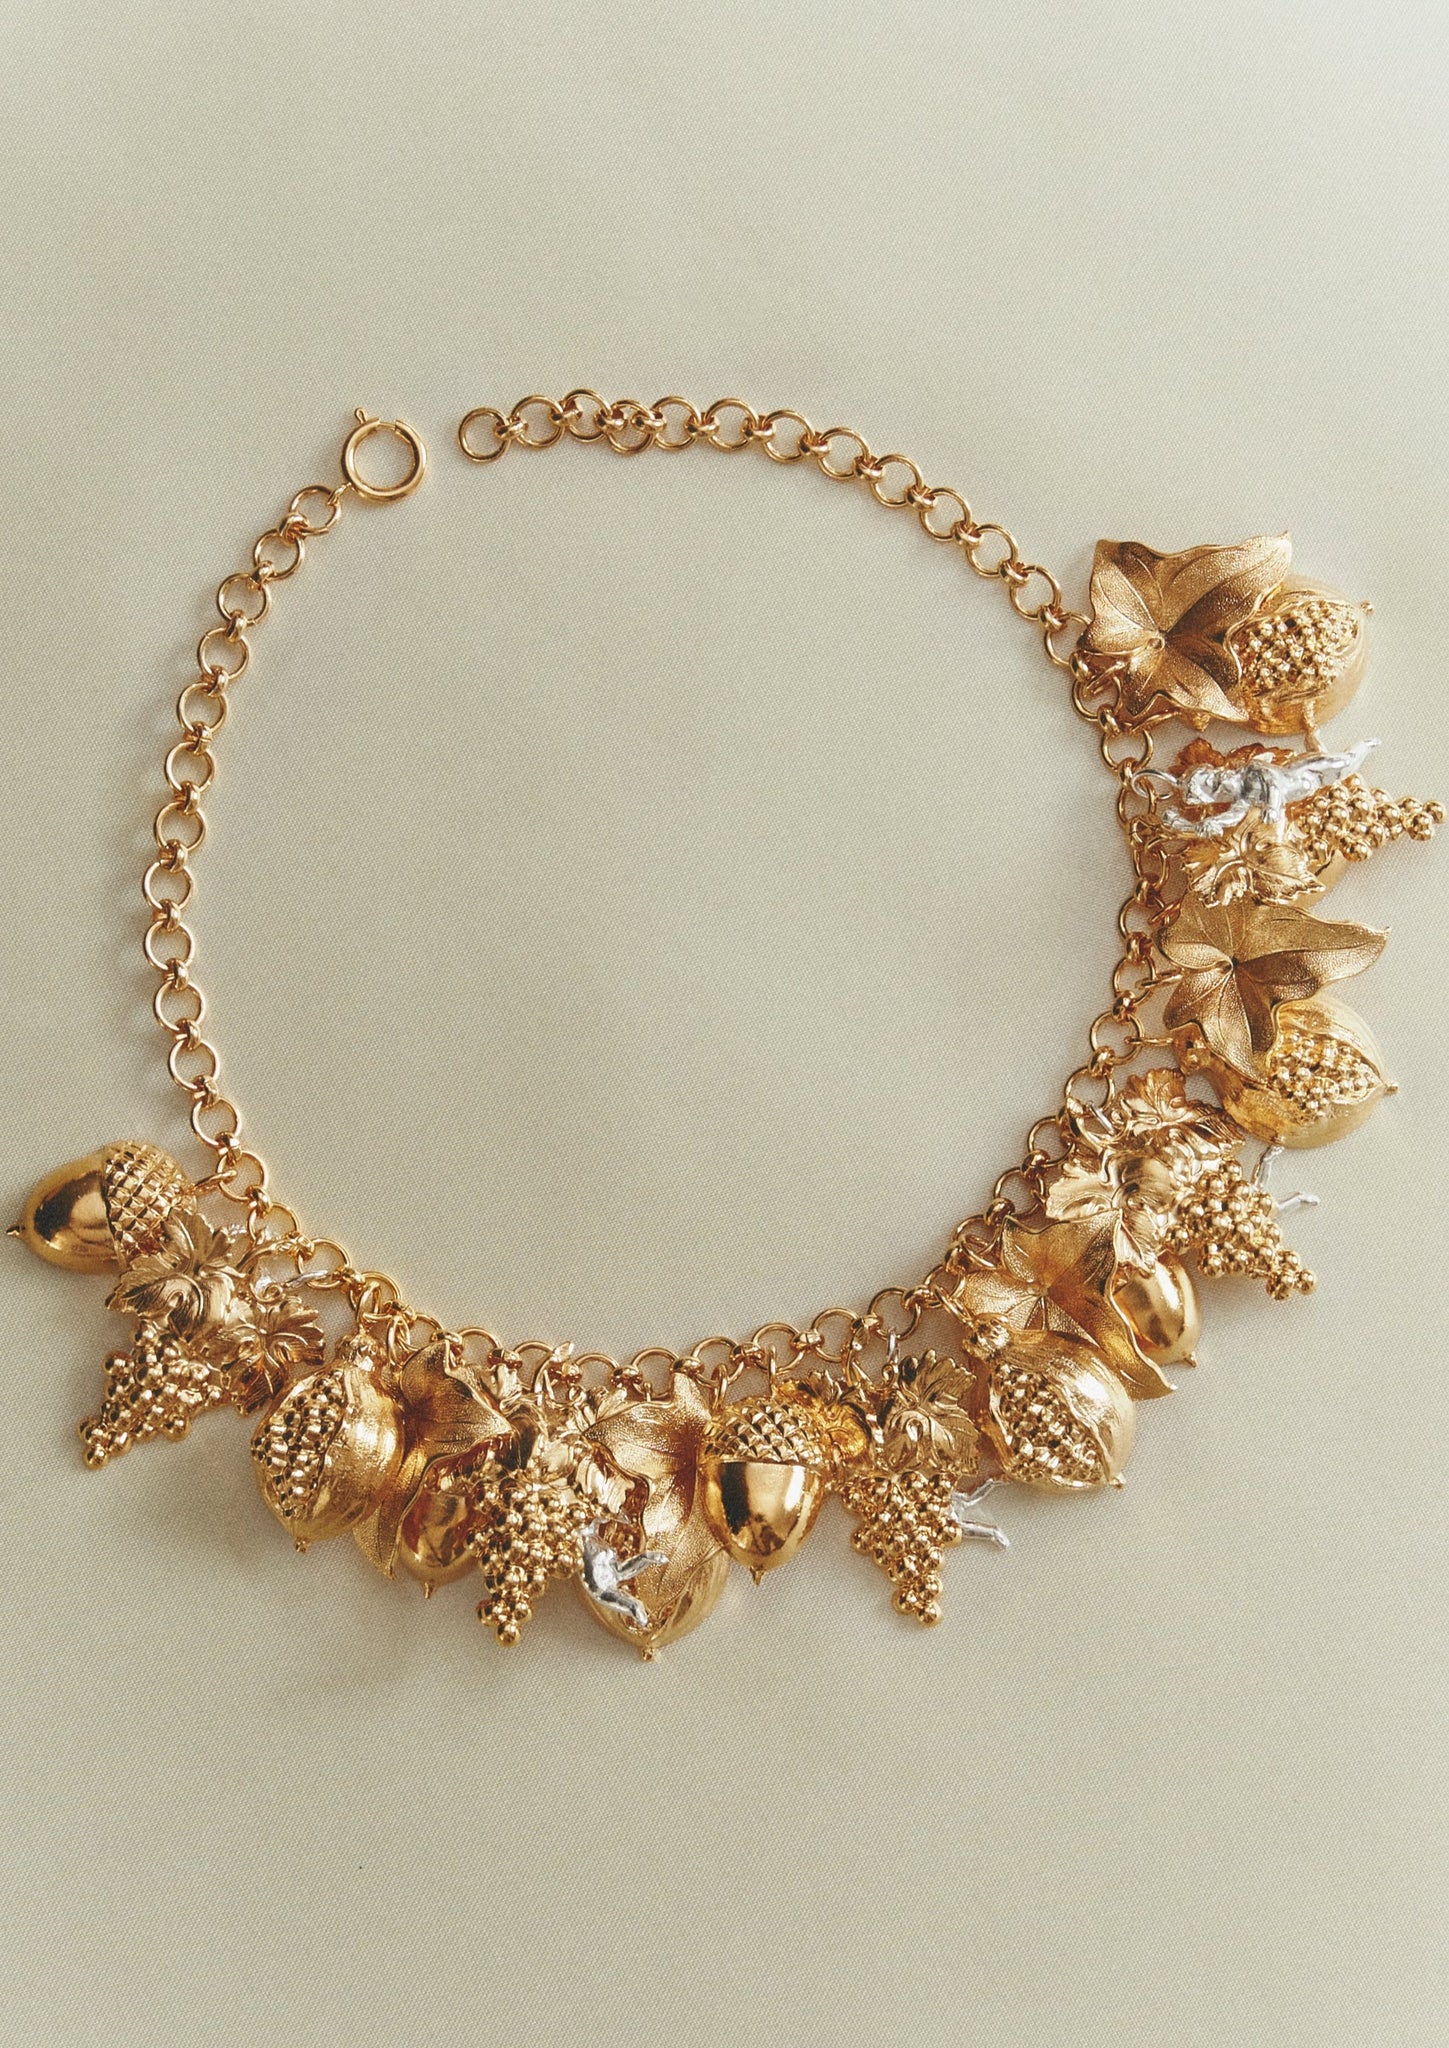 Garden of Delights necklace